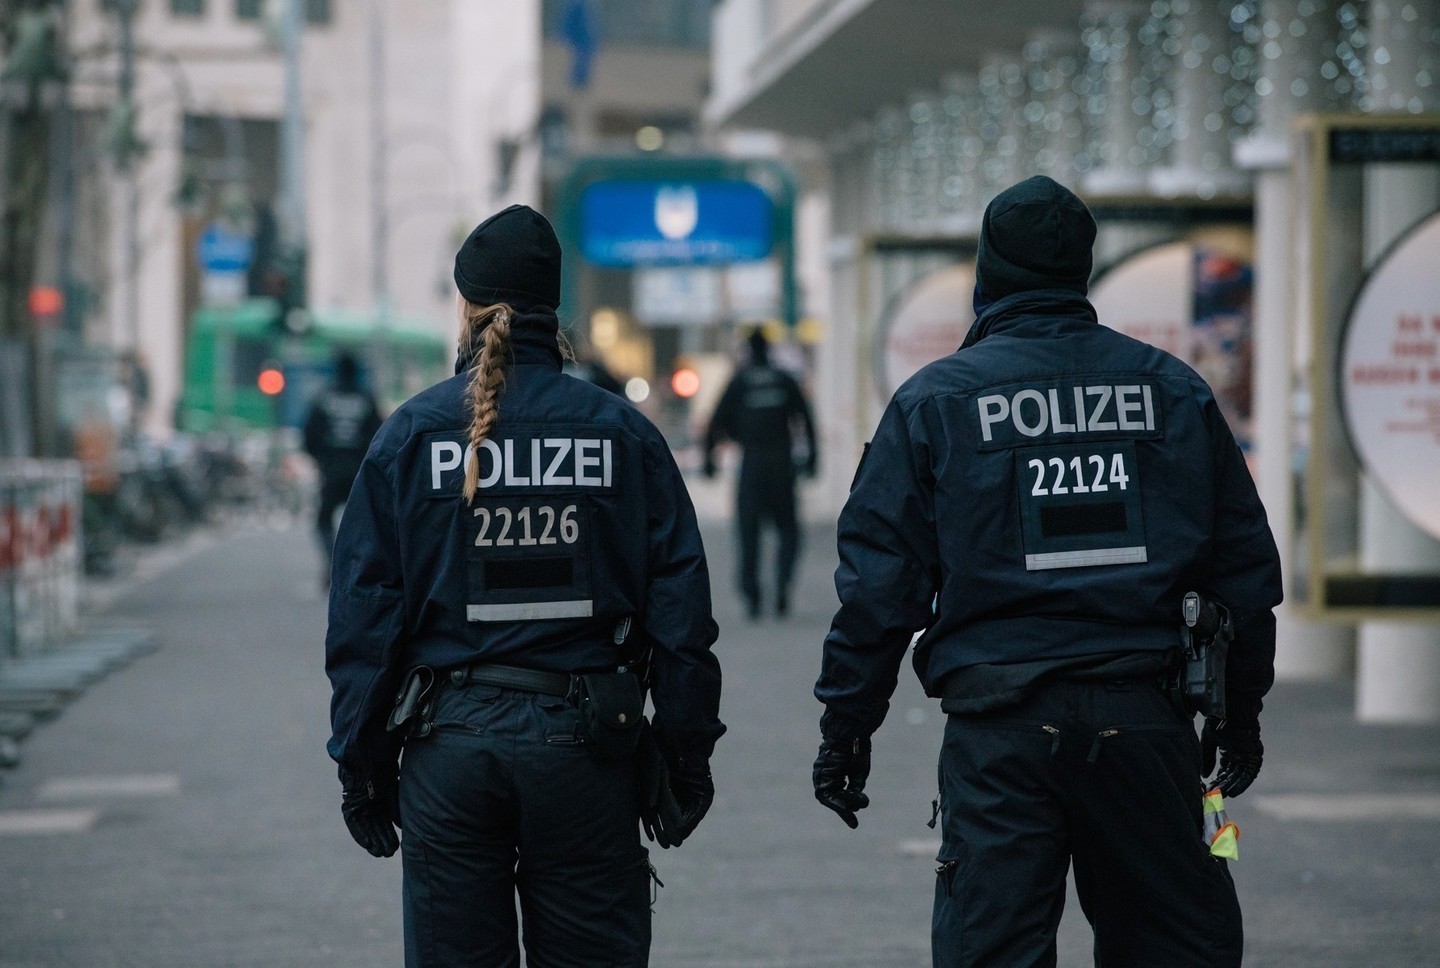 Полиция Германии.&nbsp;Фото: &copy; РИА "Новости"/Захари Шойрер










